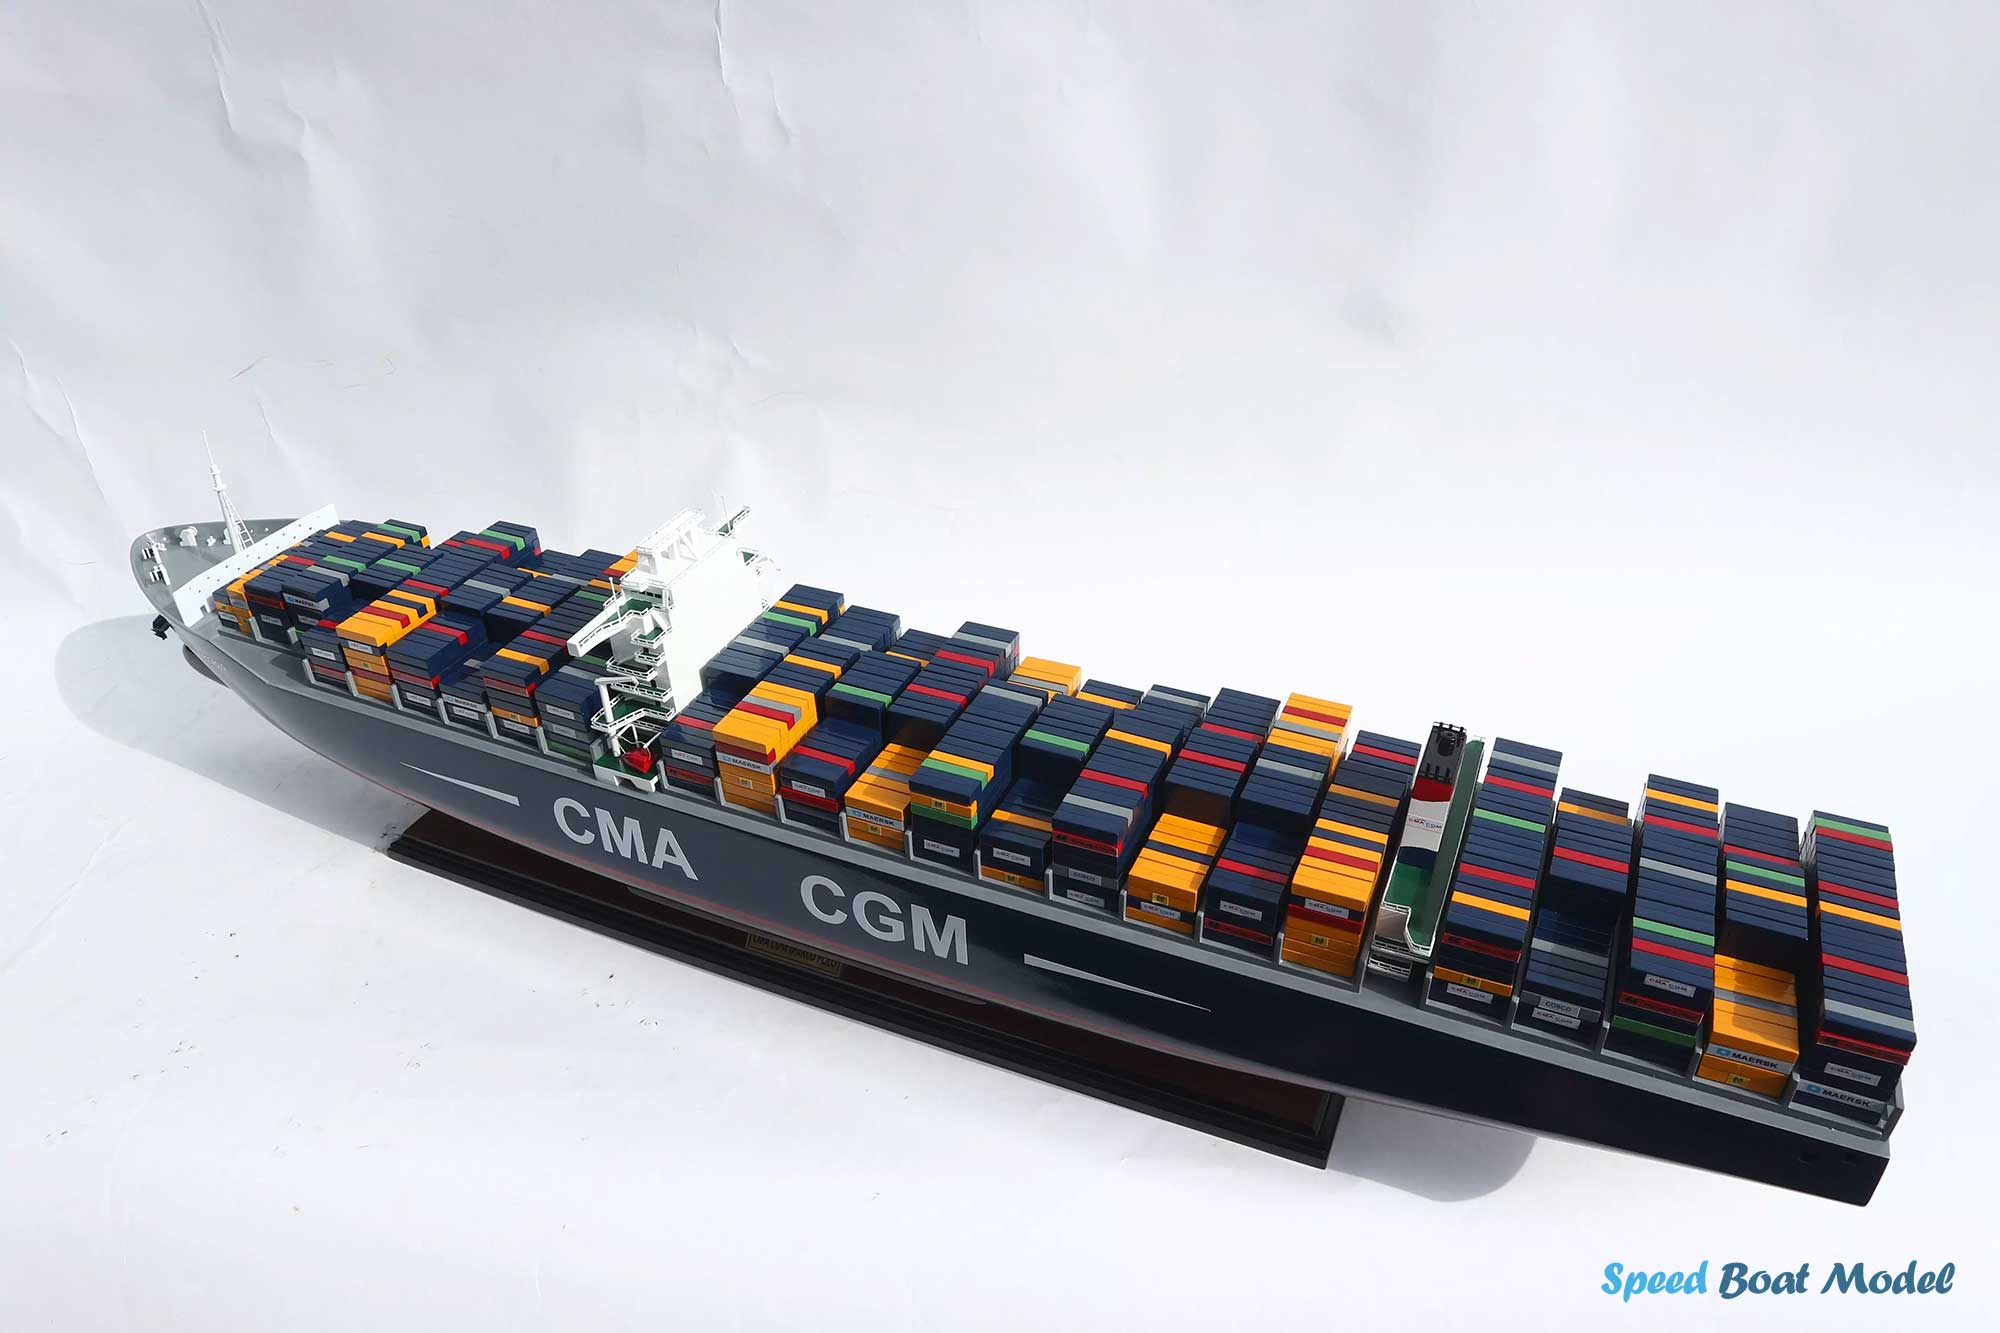 Cma Cgm Marco Polo Commercial Ship Model (4)